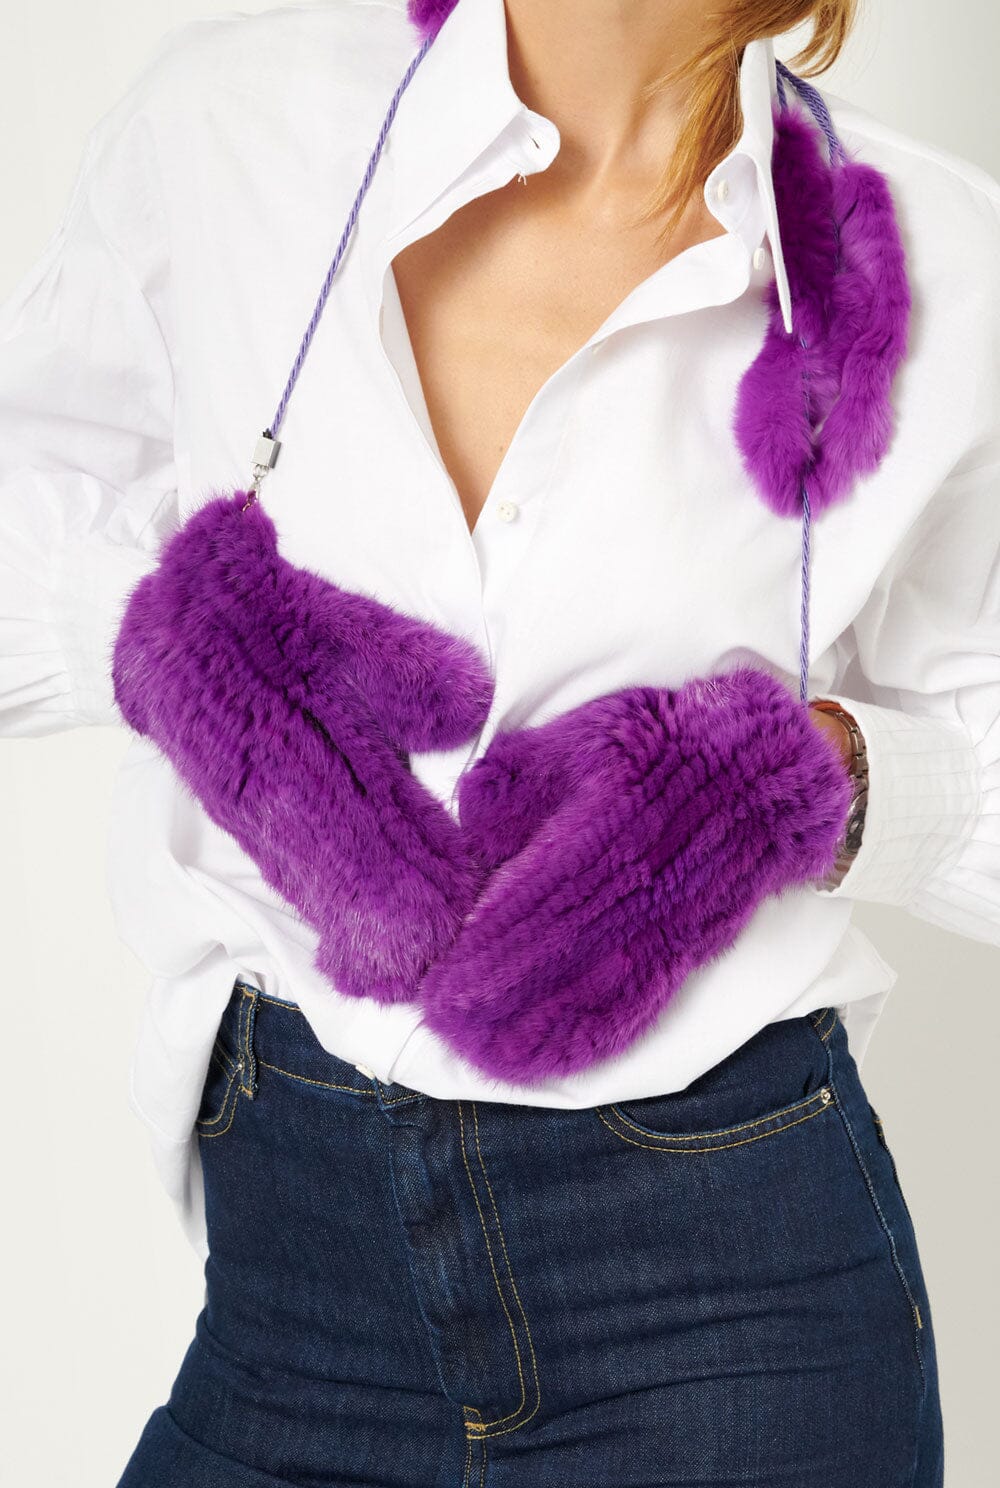 Iceberg mittens bright purple Gloves Baltei Studio 